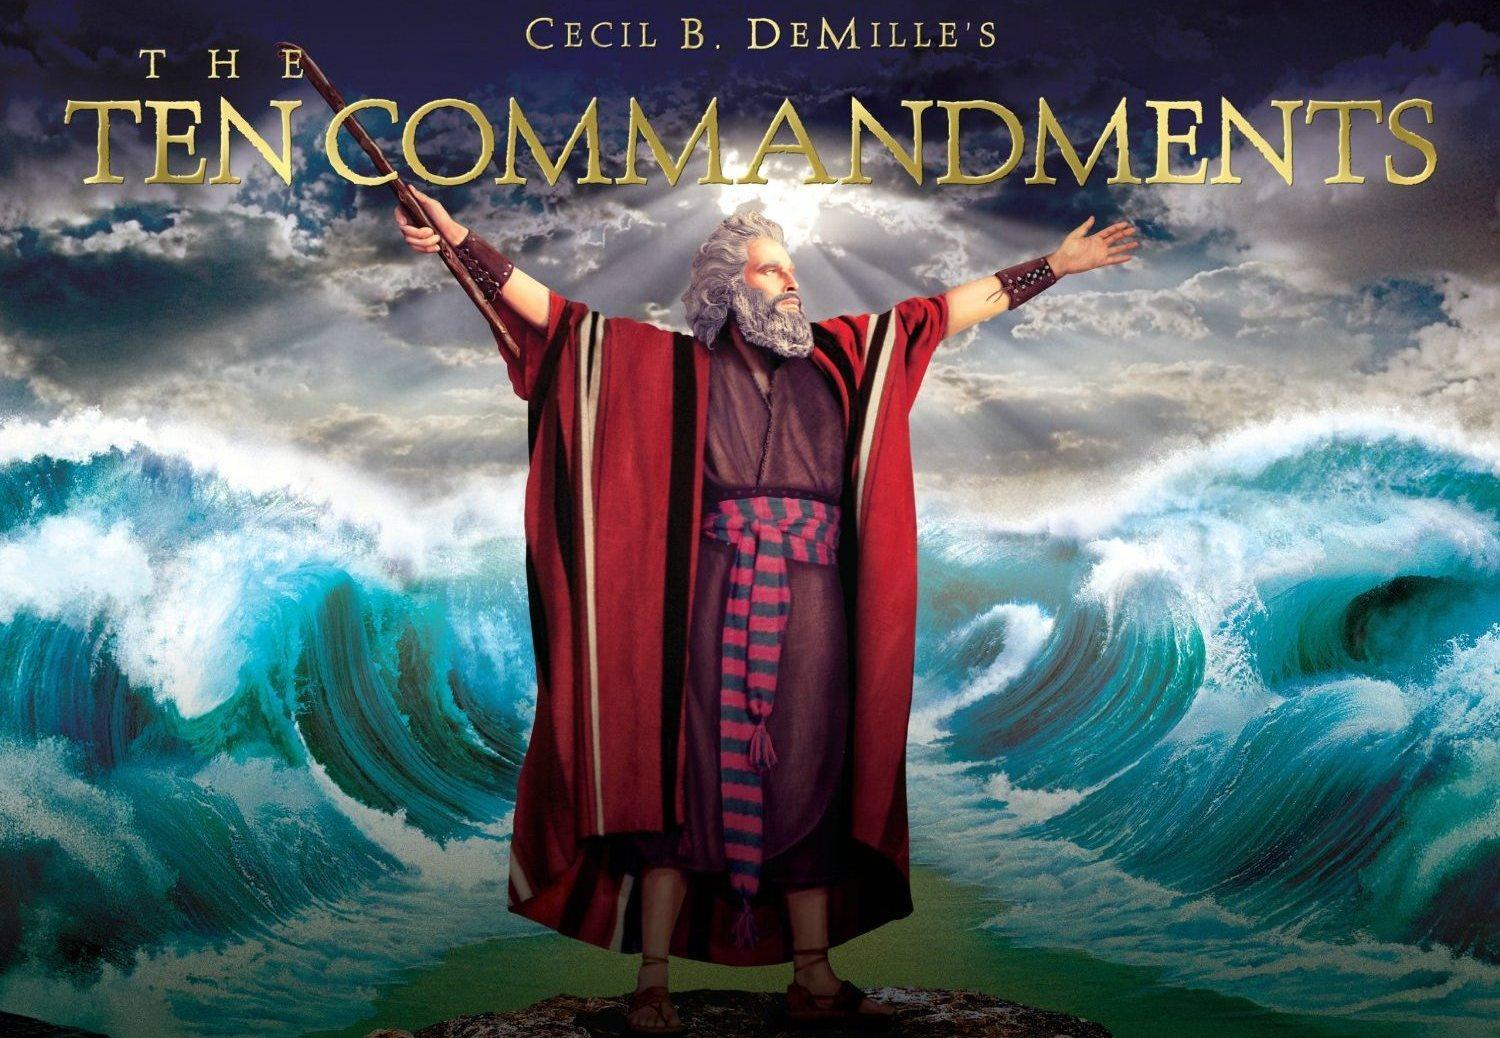 ON FILM: The Ten Commandments